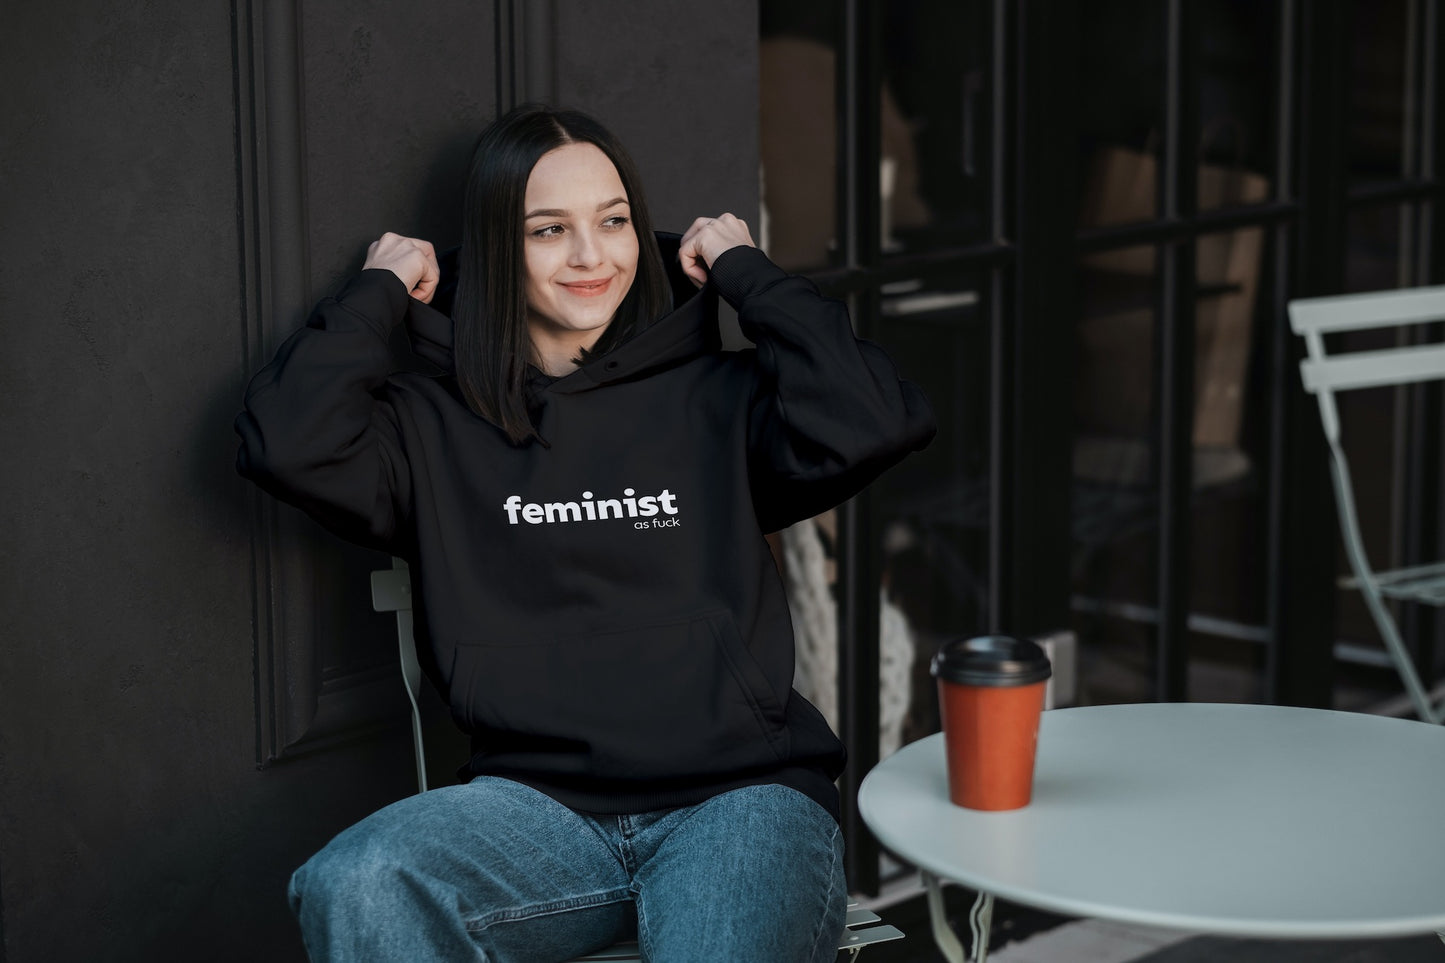 Mikina s kapucí Feminist as fuck